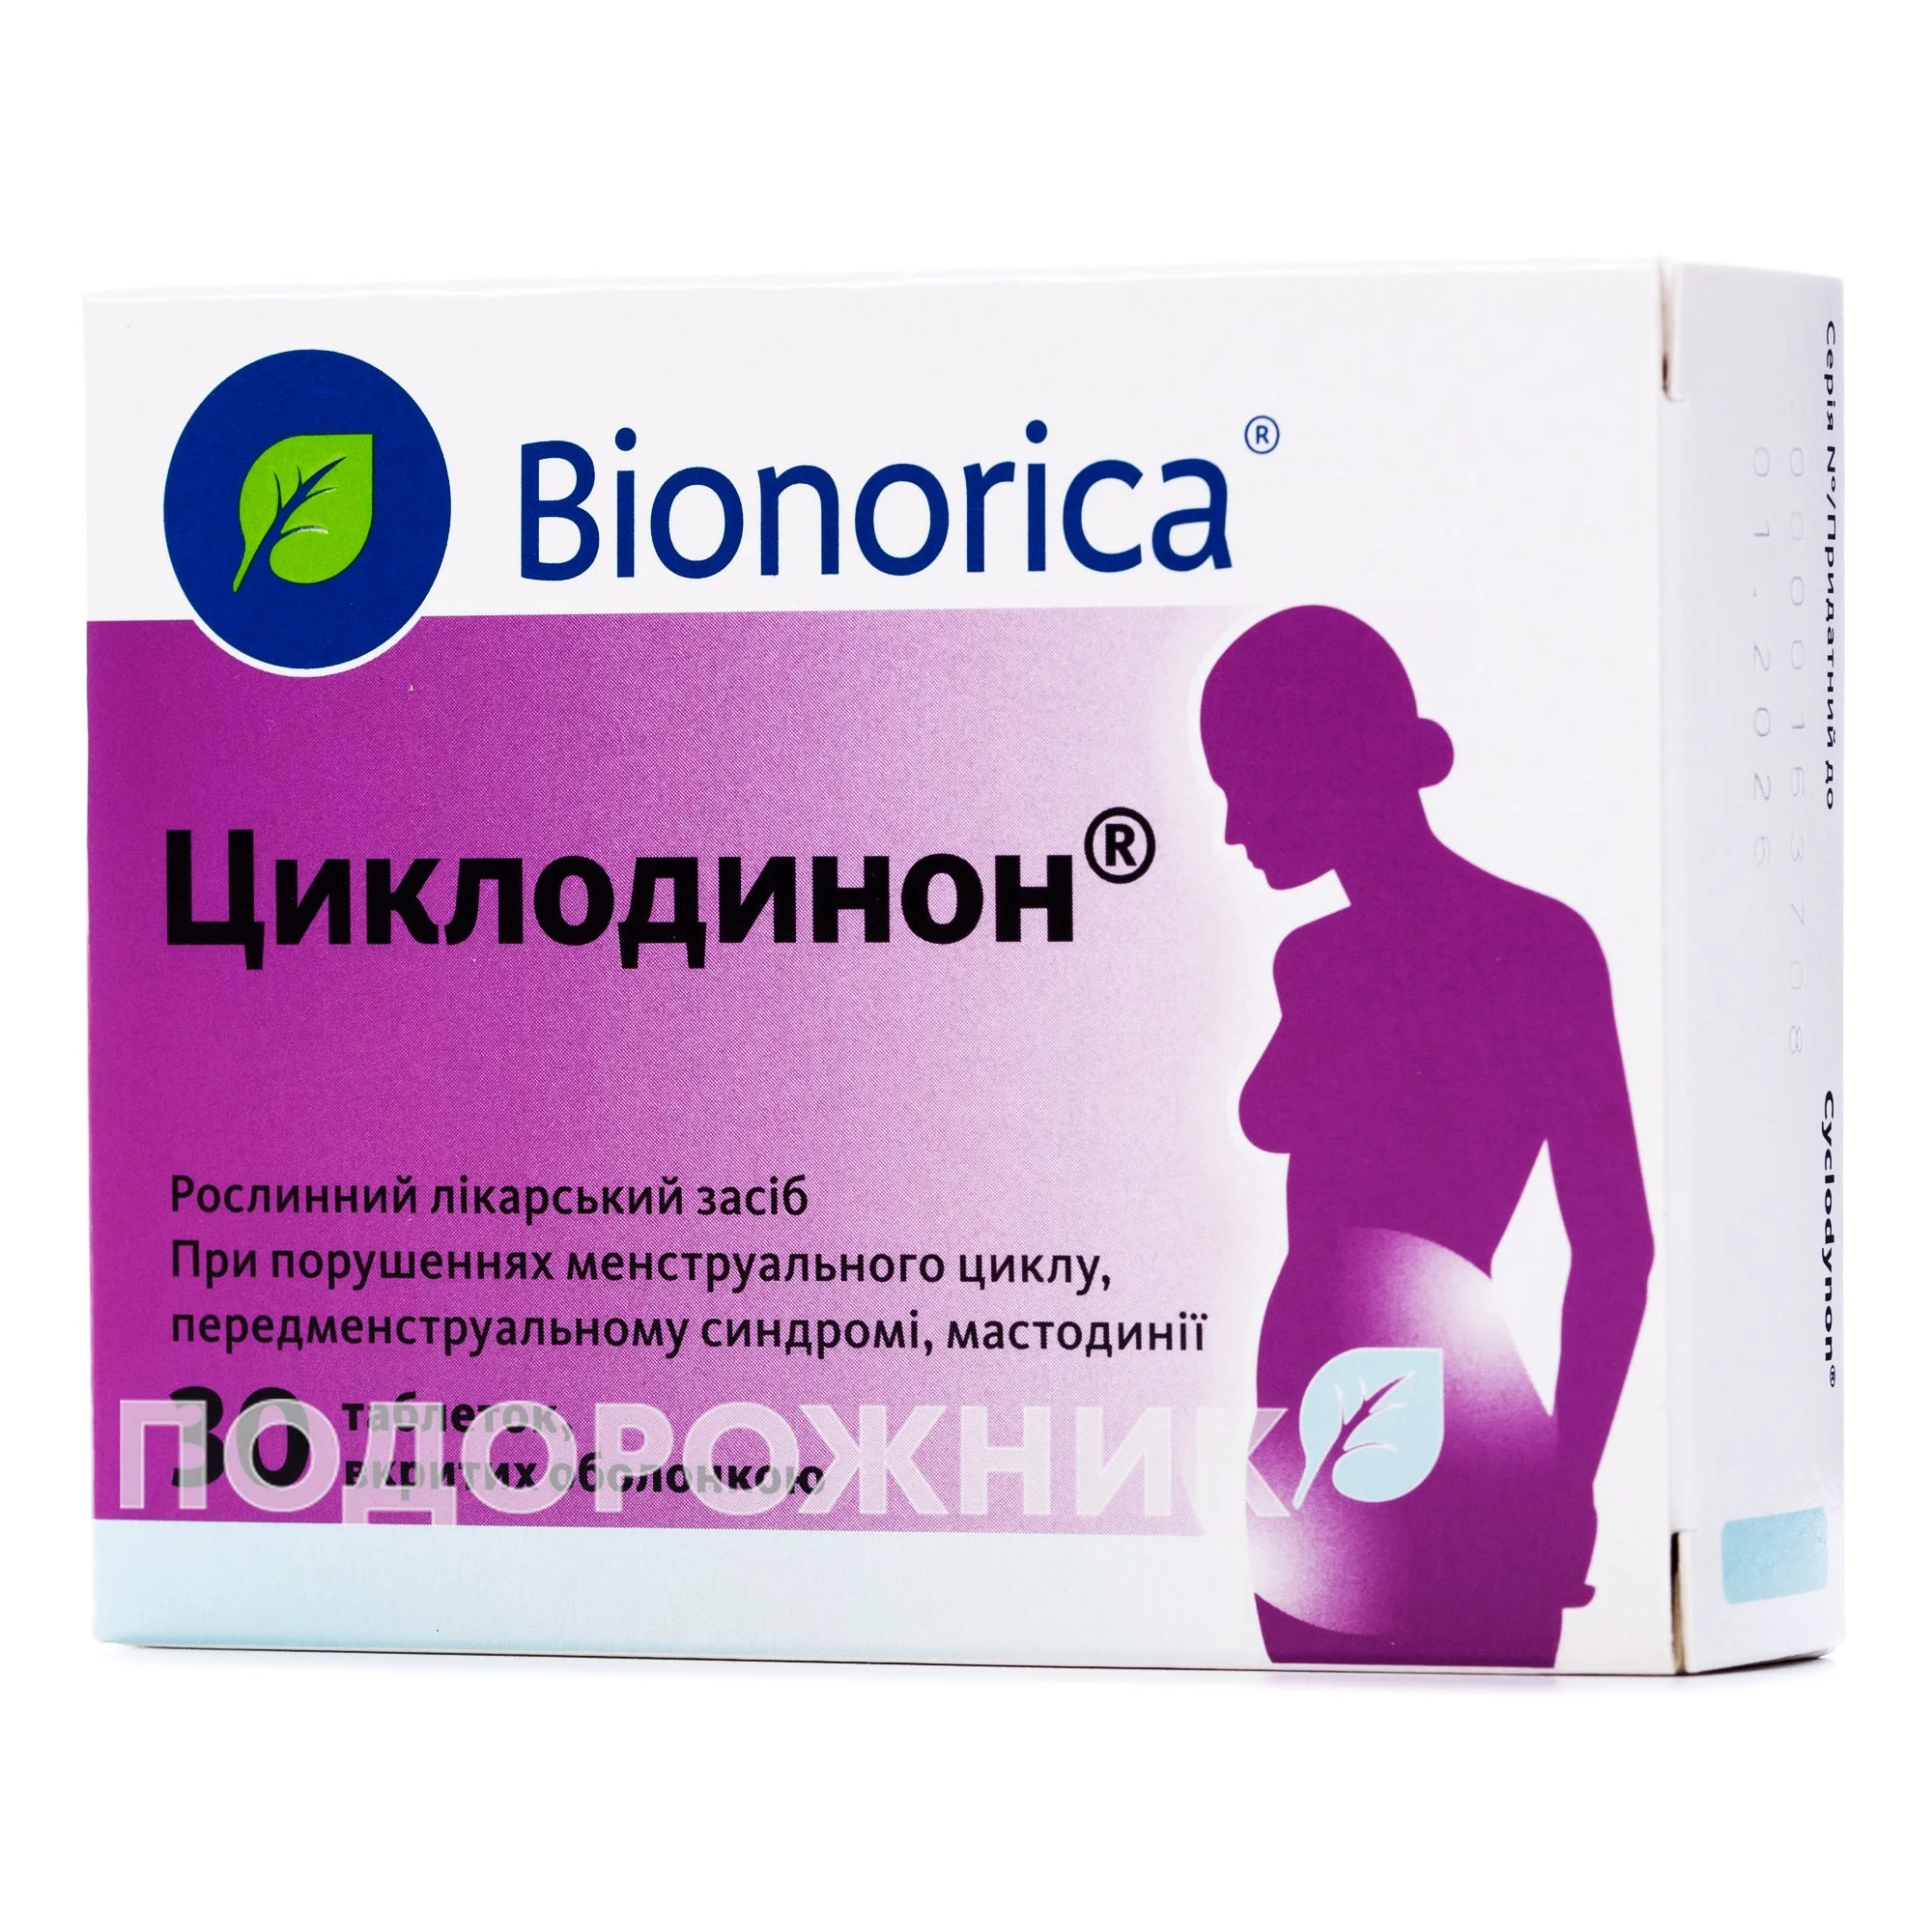 Bionorica Циклодинон. Циклодинон таблетки, 30 шт. Бионорика. Циклодинон 30. Мастодинон купить в москве